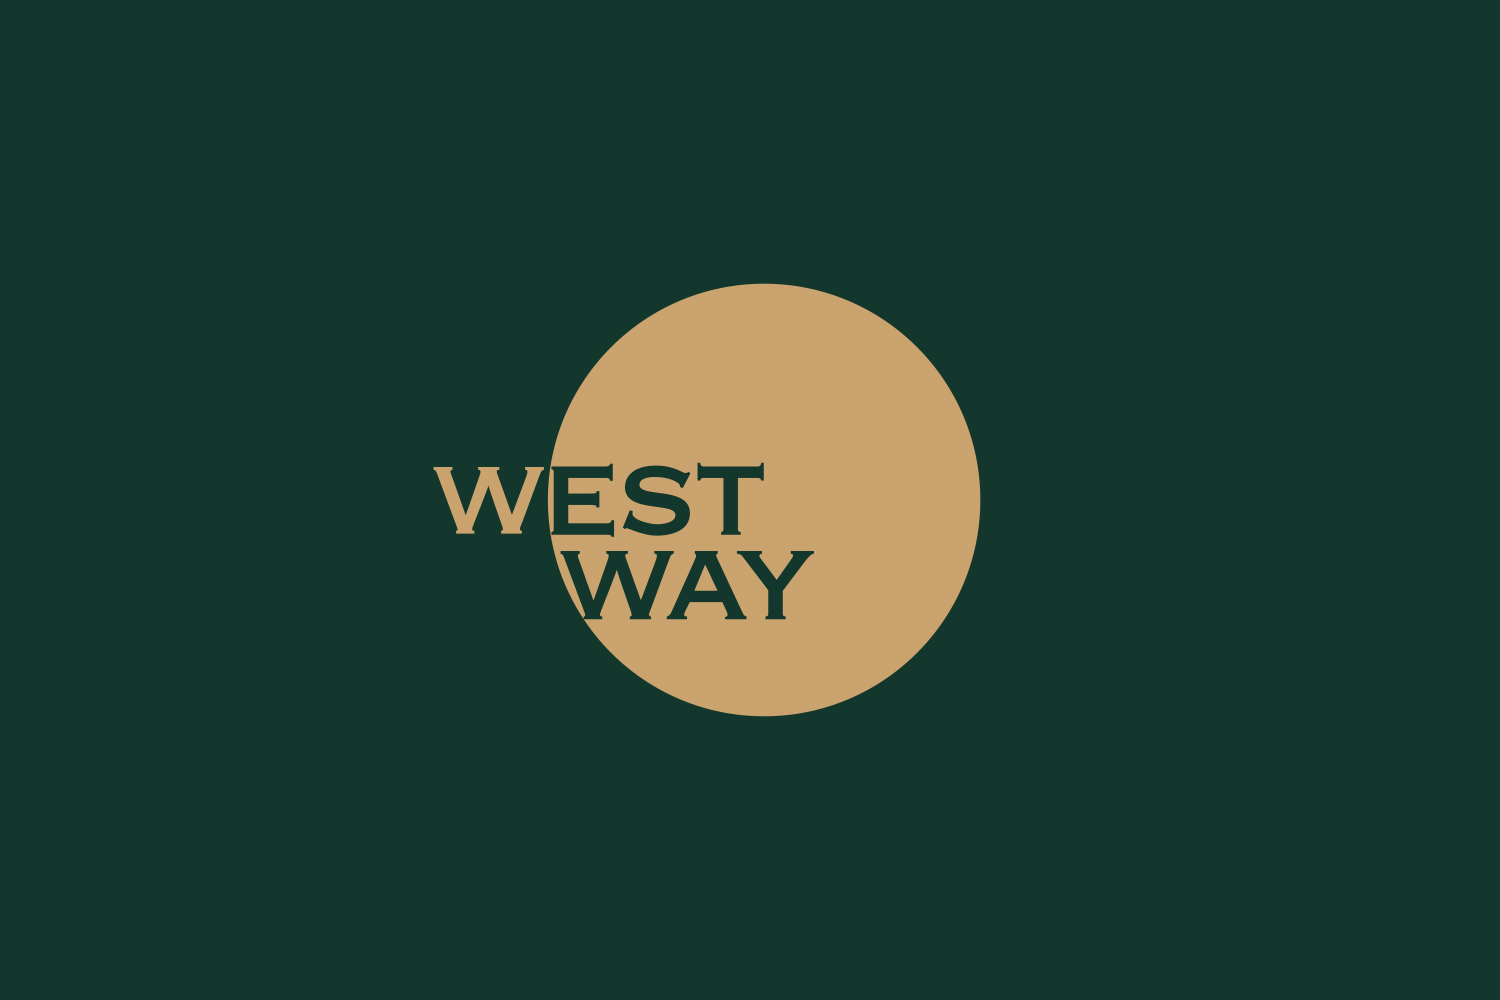 Westway logo on dark green